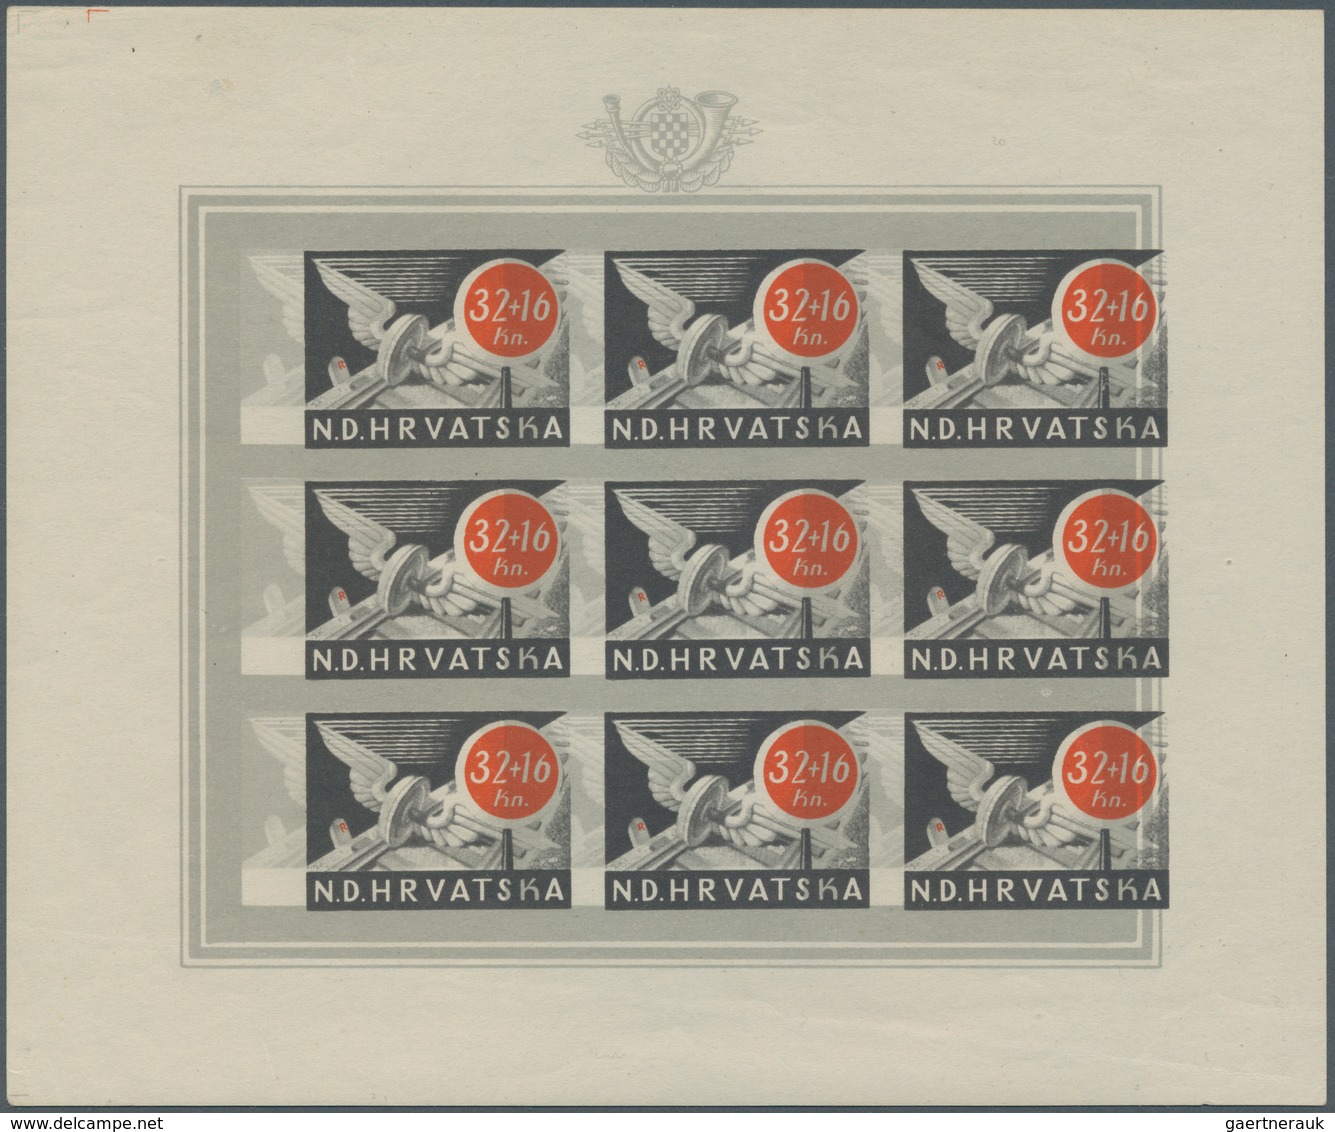 Kroatien: 1944 (3 Feb). Postal and Railway Employees Fund. Variety: 7K + 3.50K brown and bistre, 16K